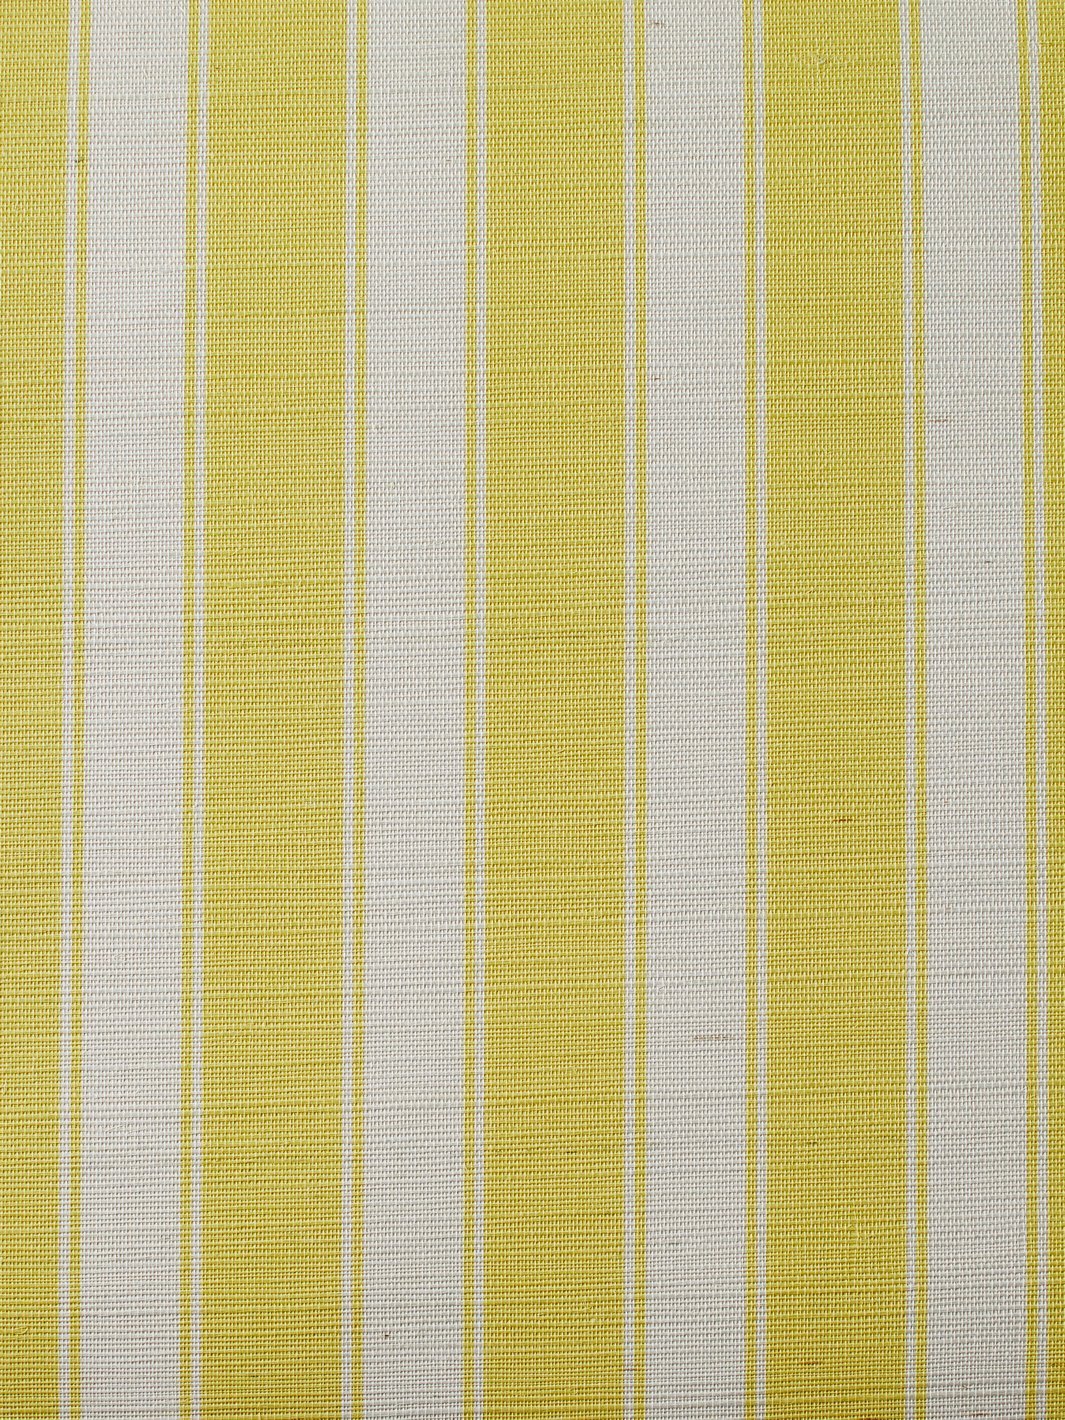 'Ojai Stripe' Grasscloth' Wallpaper by Wallshoppe - Yellow